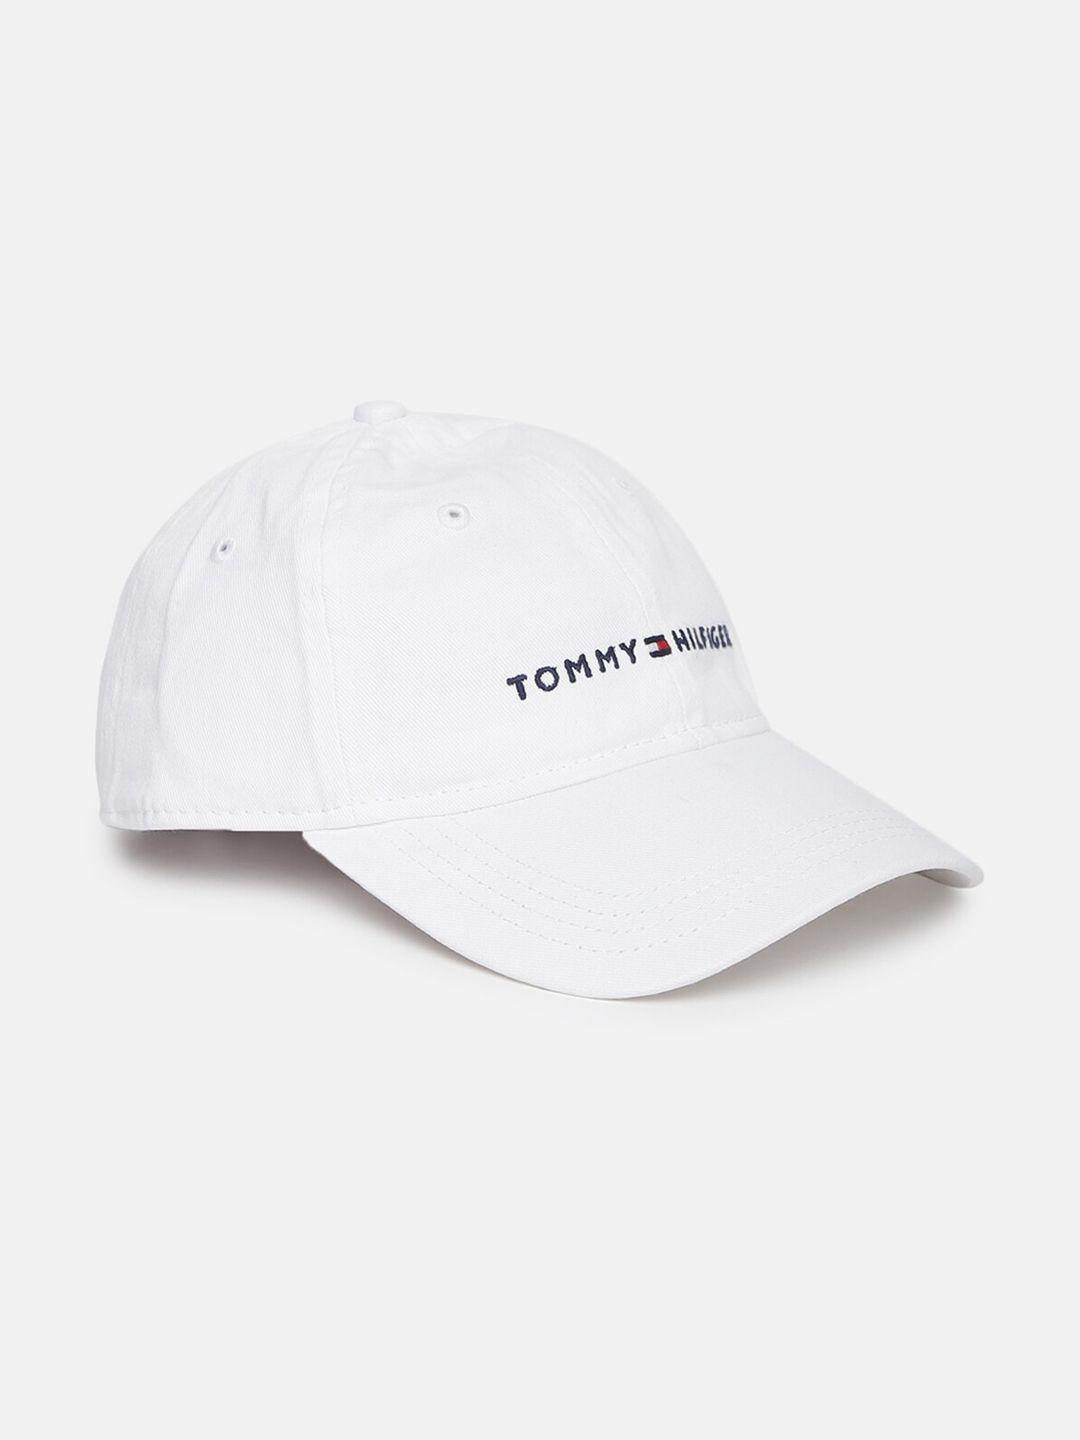 tommy hilfiger men brand logo embroidered cotton baseball cap